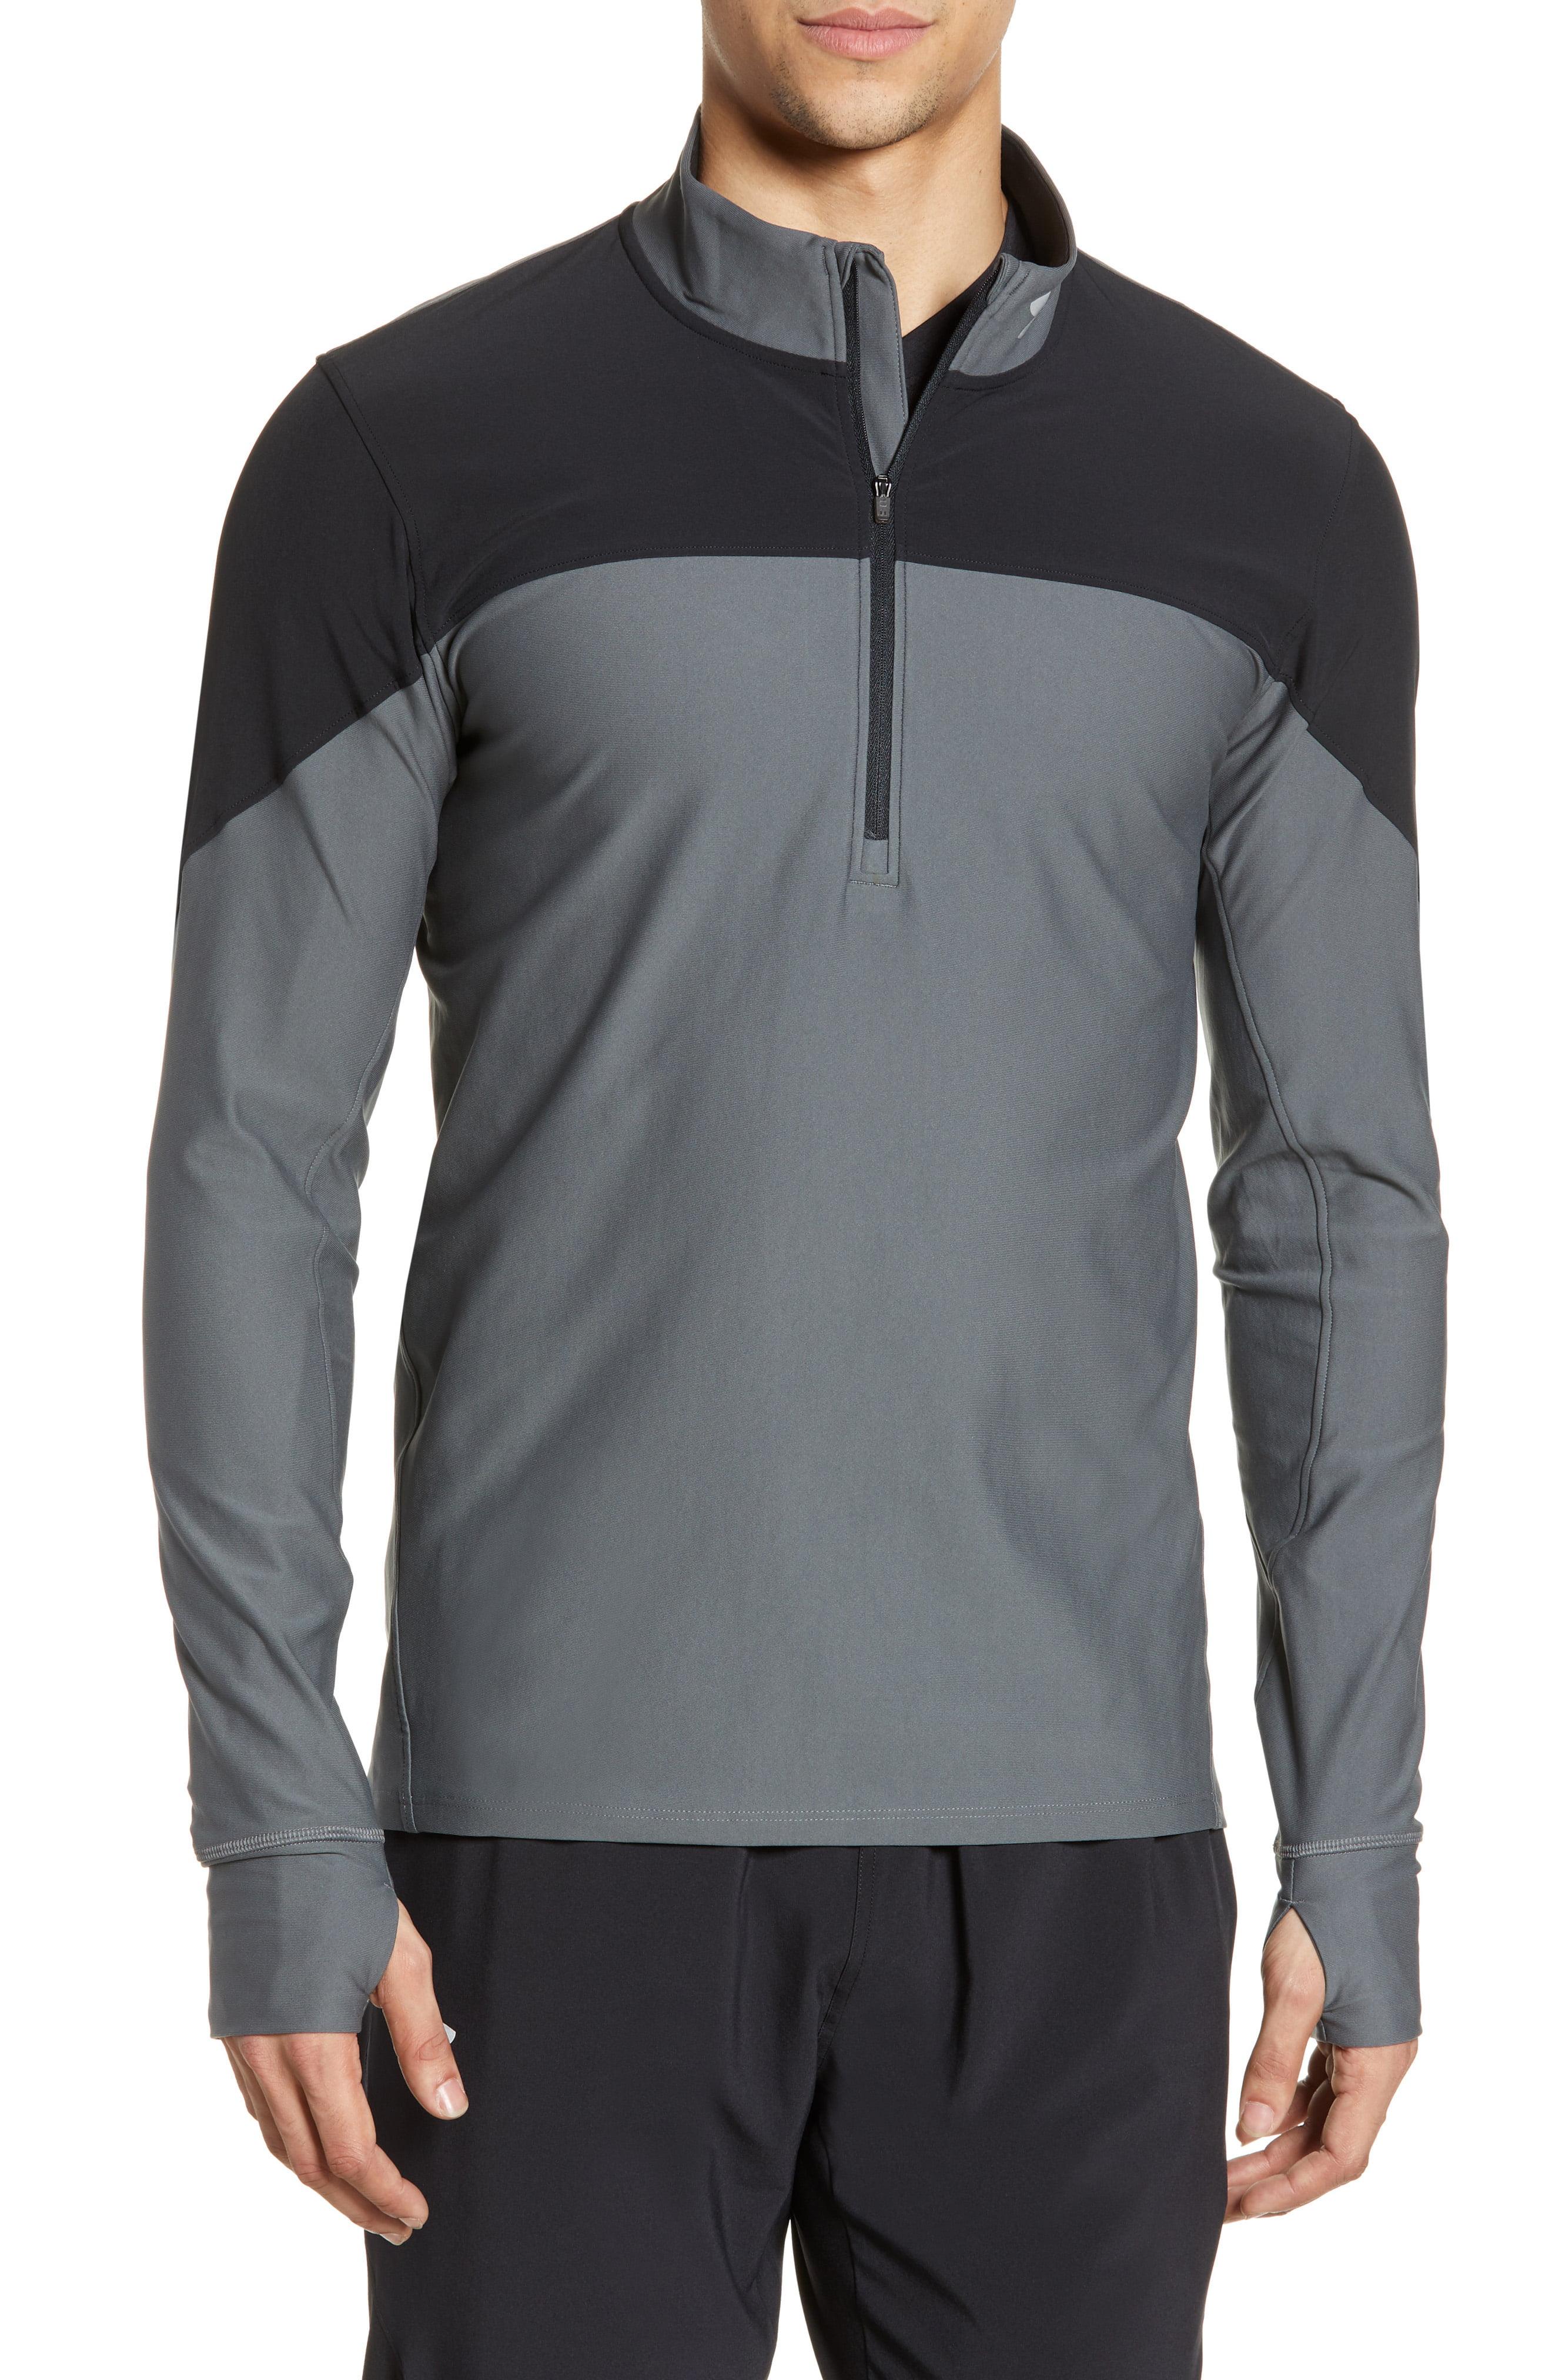 Lyst - Under Armour Heatgear Colorblock Half Zip Pullover in Gray for Men